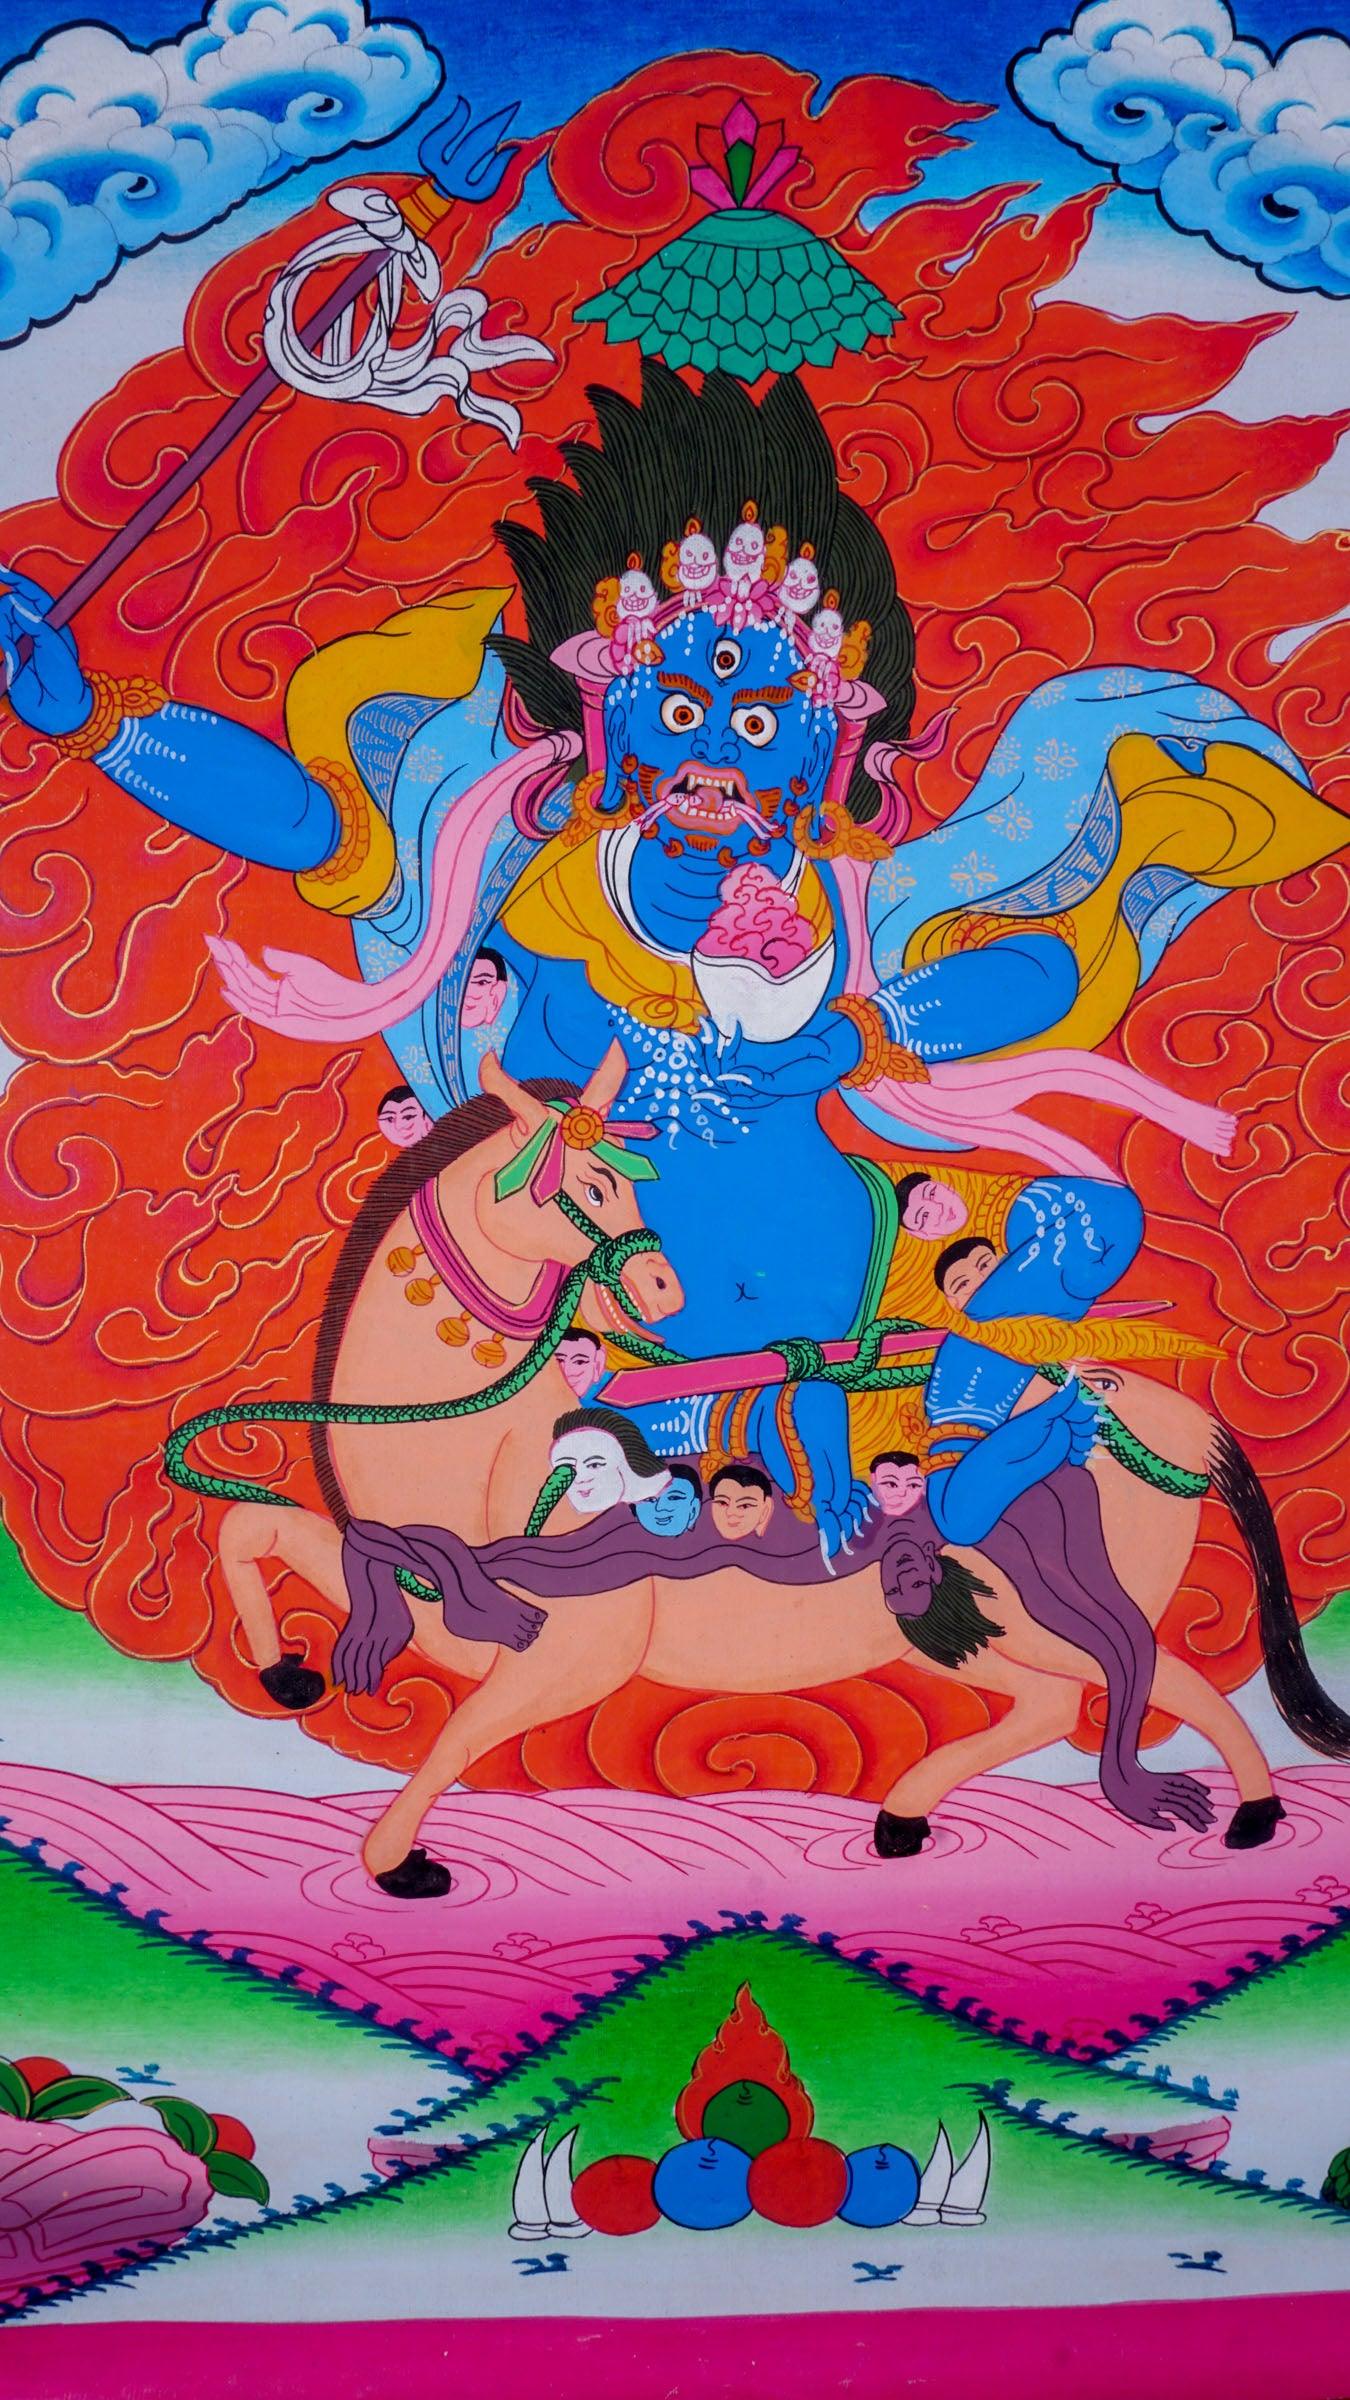 Protector deity - Palden Lhamo Thangka Painting